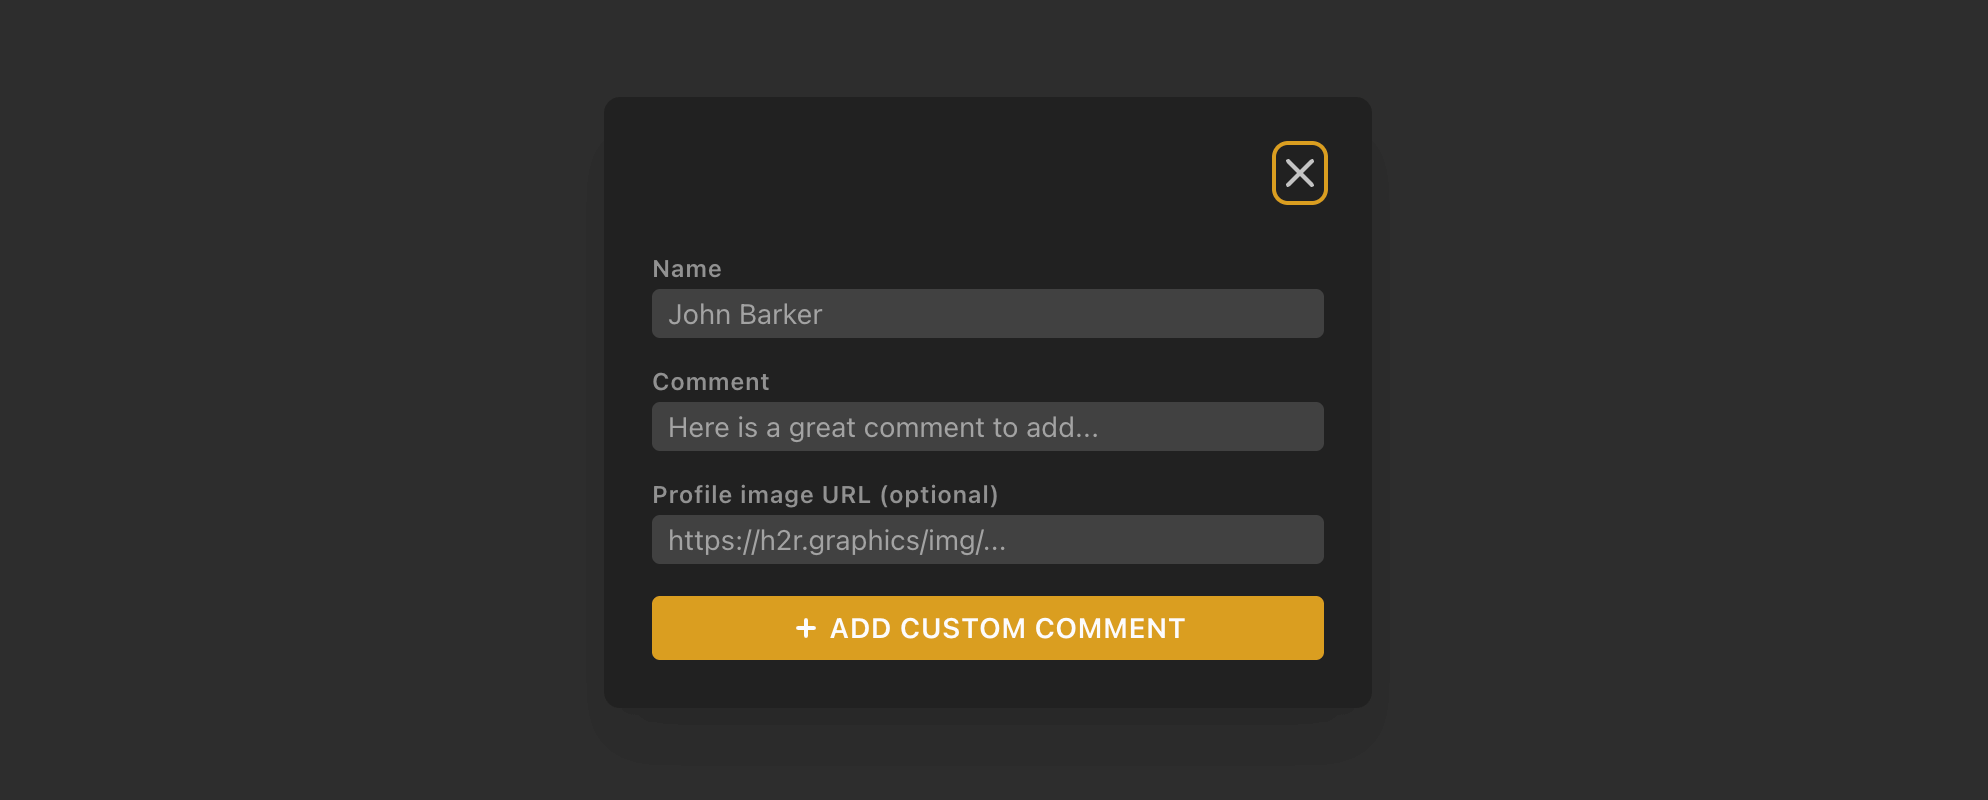 Adding a custom comment